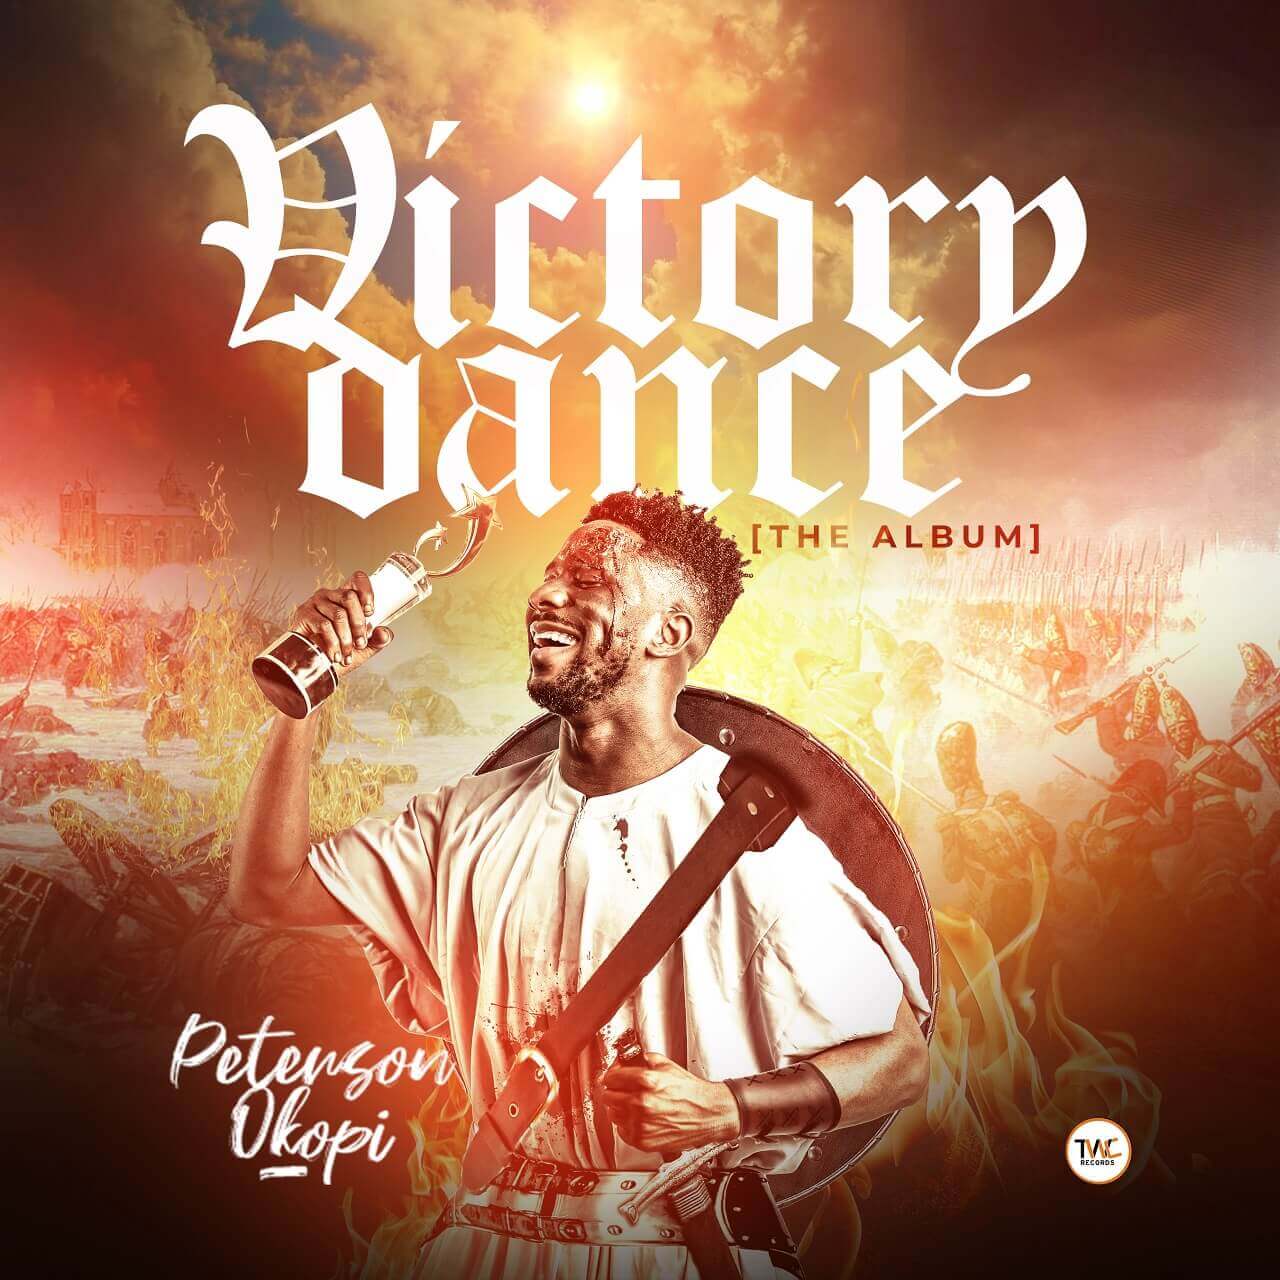 Victory Dance - Peterson Okopi